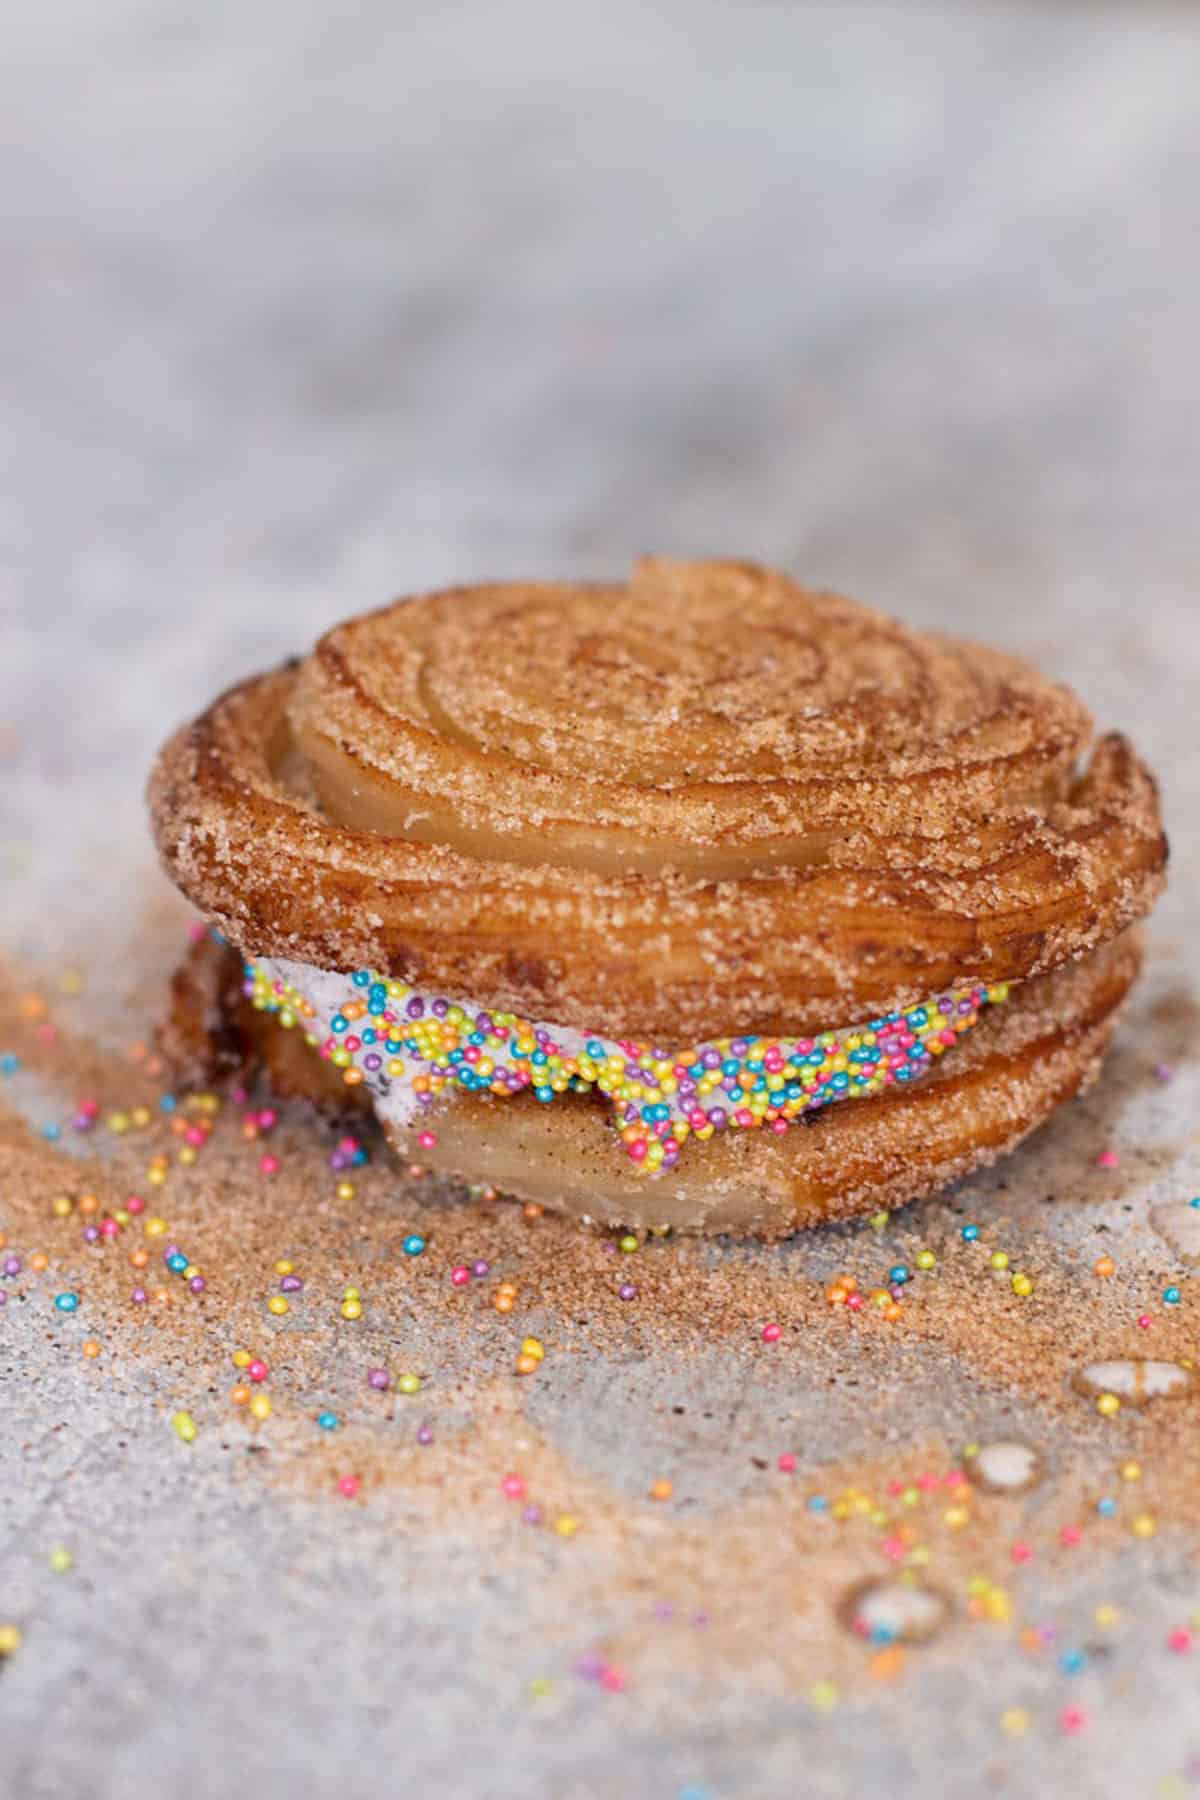 Churro ice cream sandwich dipped in sprinkles.